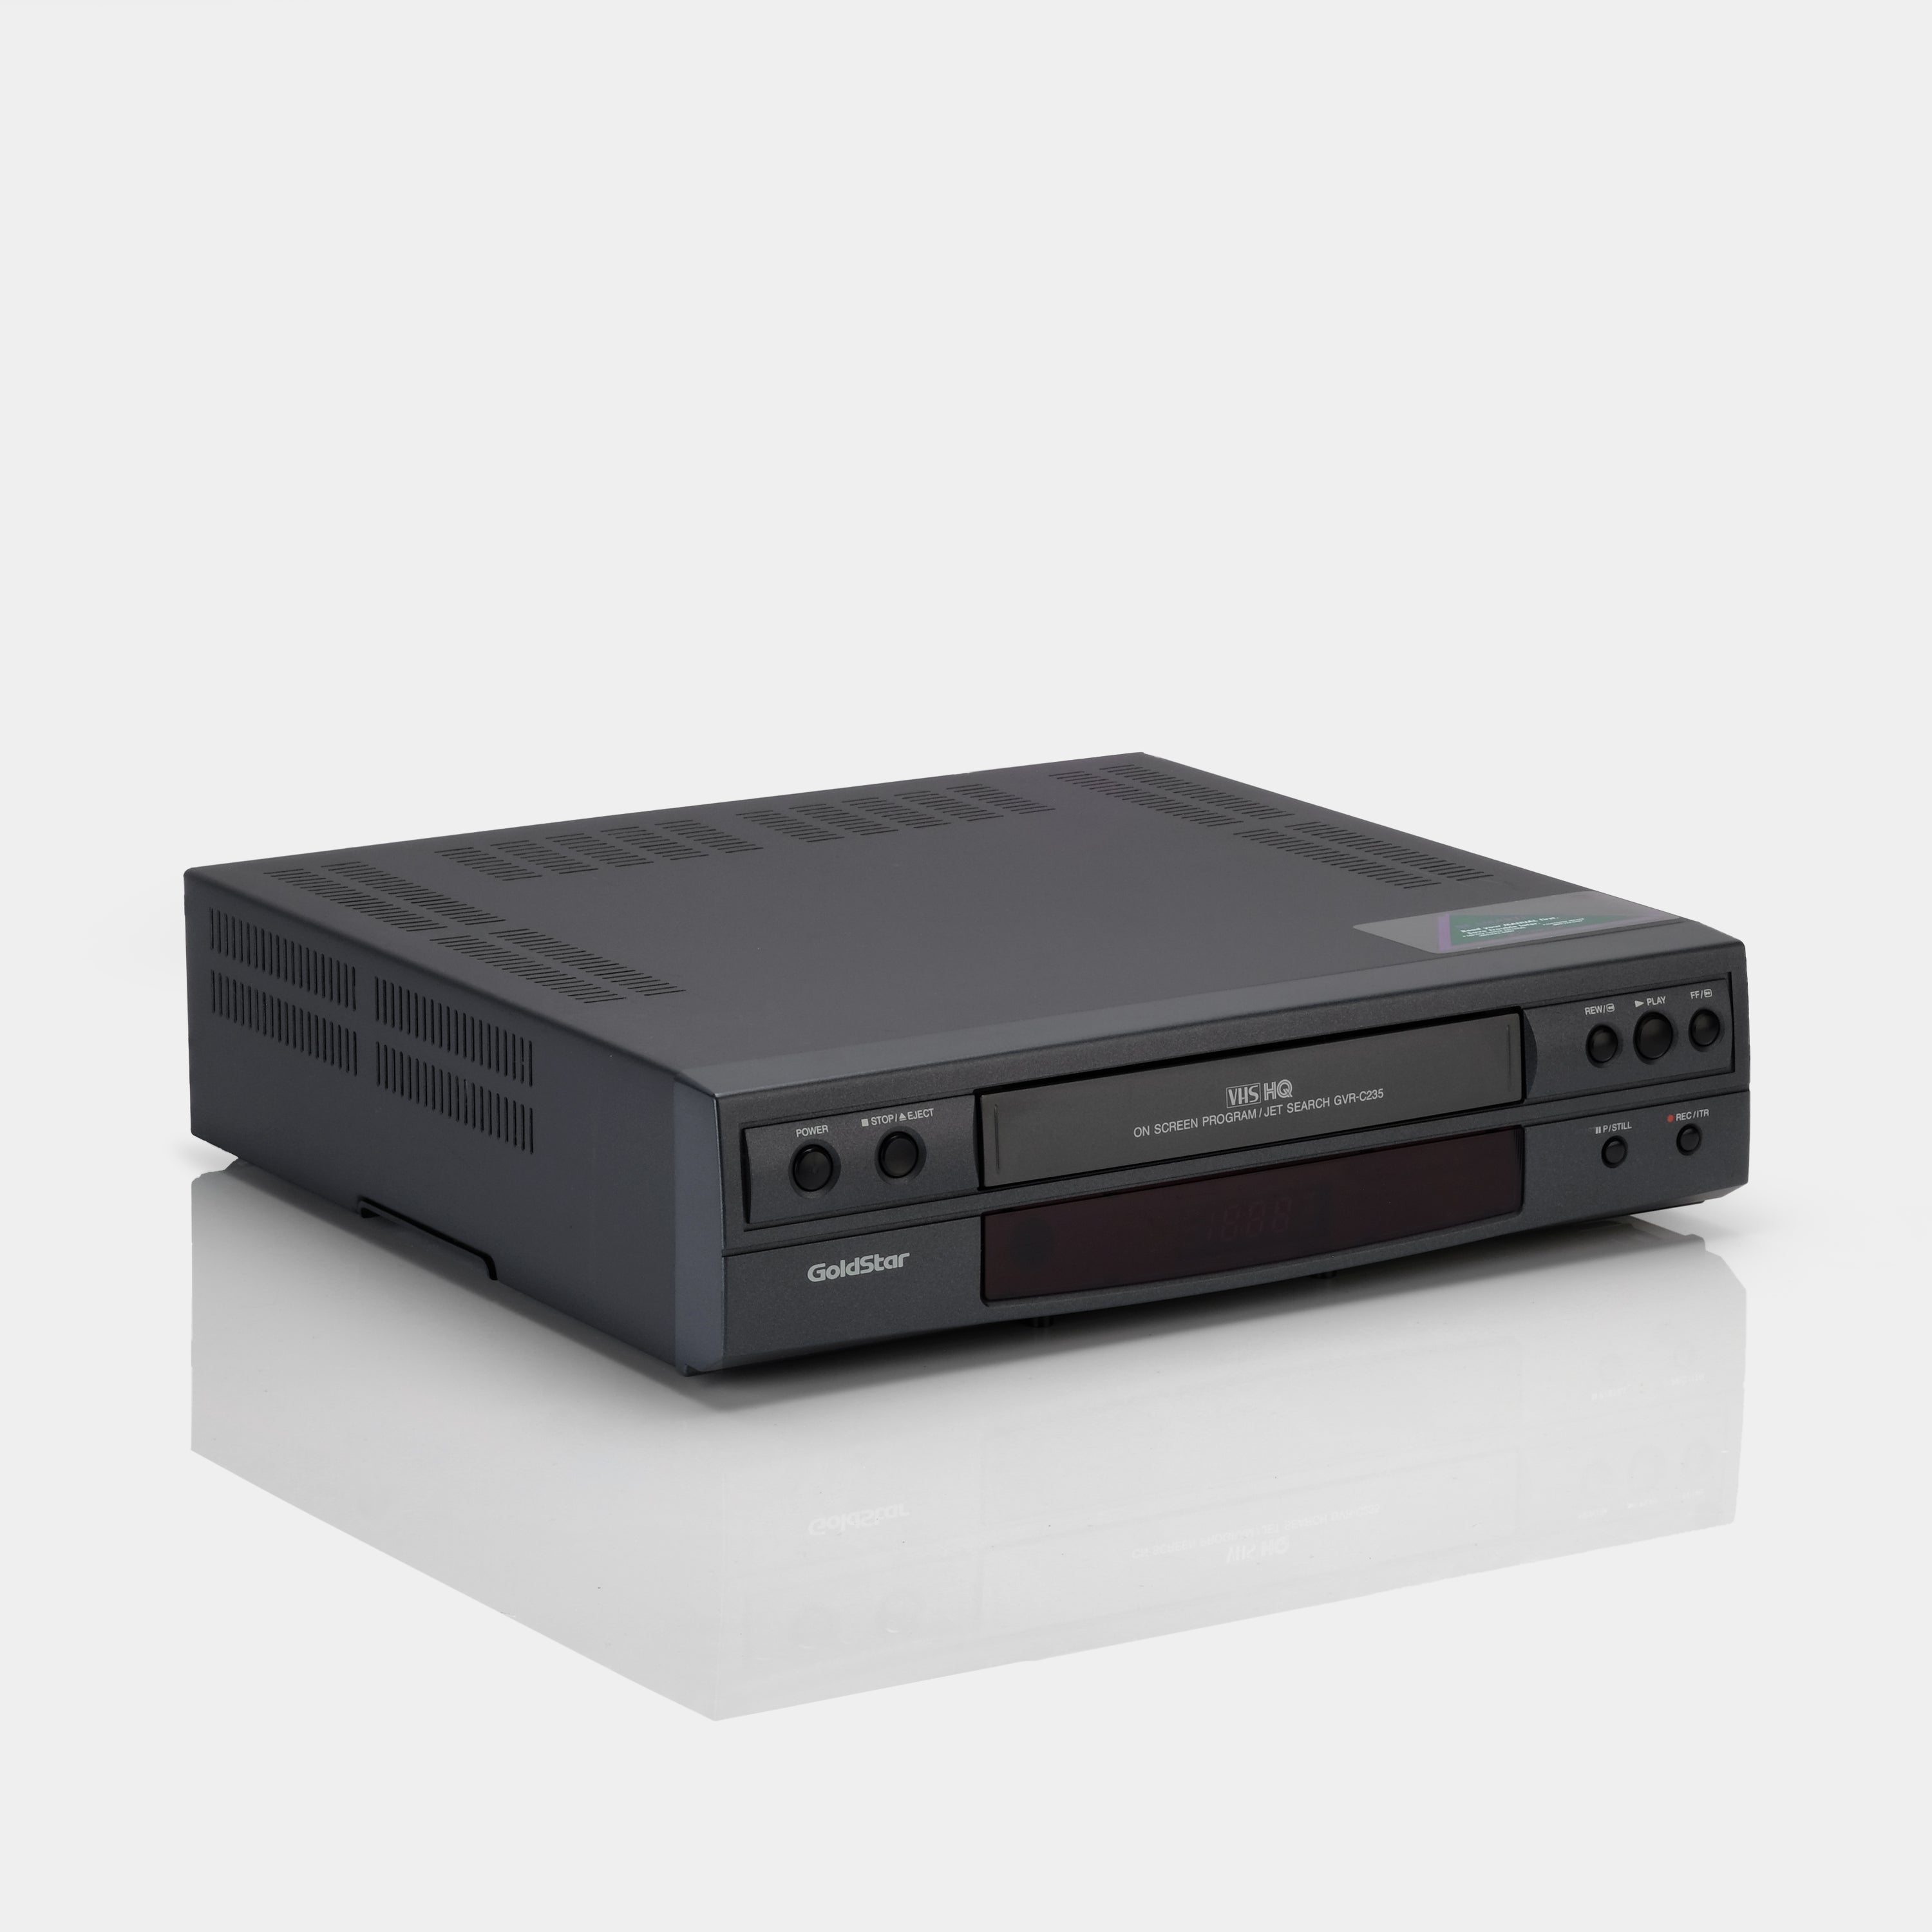 Goldstar GVR-C235 VCR VHS Player